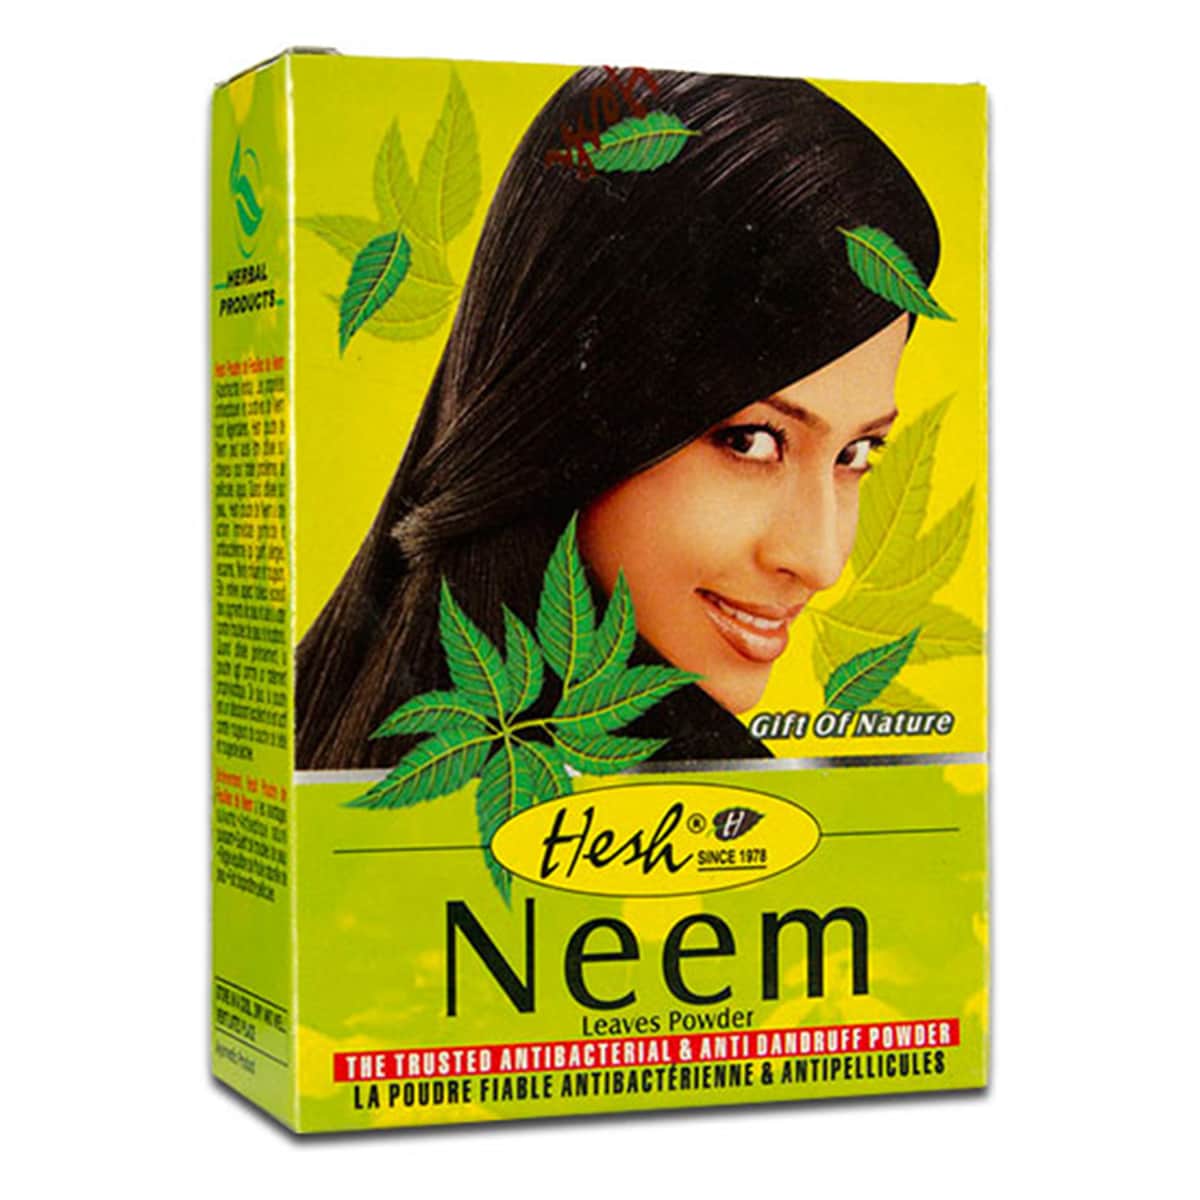 Buy Hesh Neem Leaves Powder - 100 gm